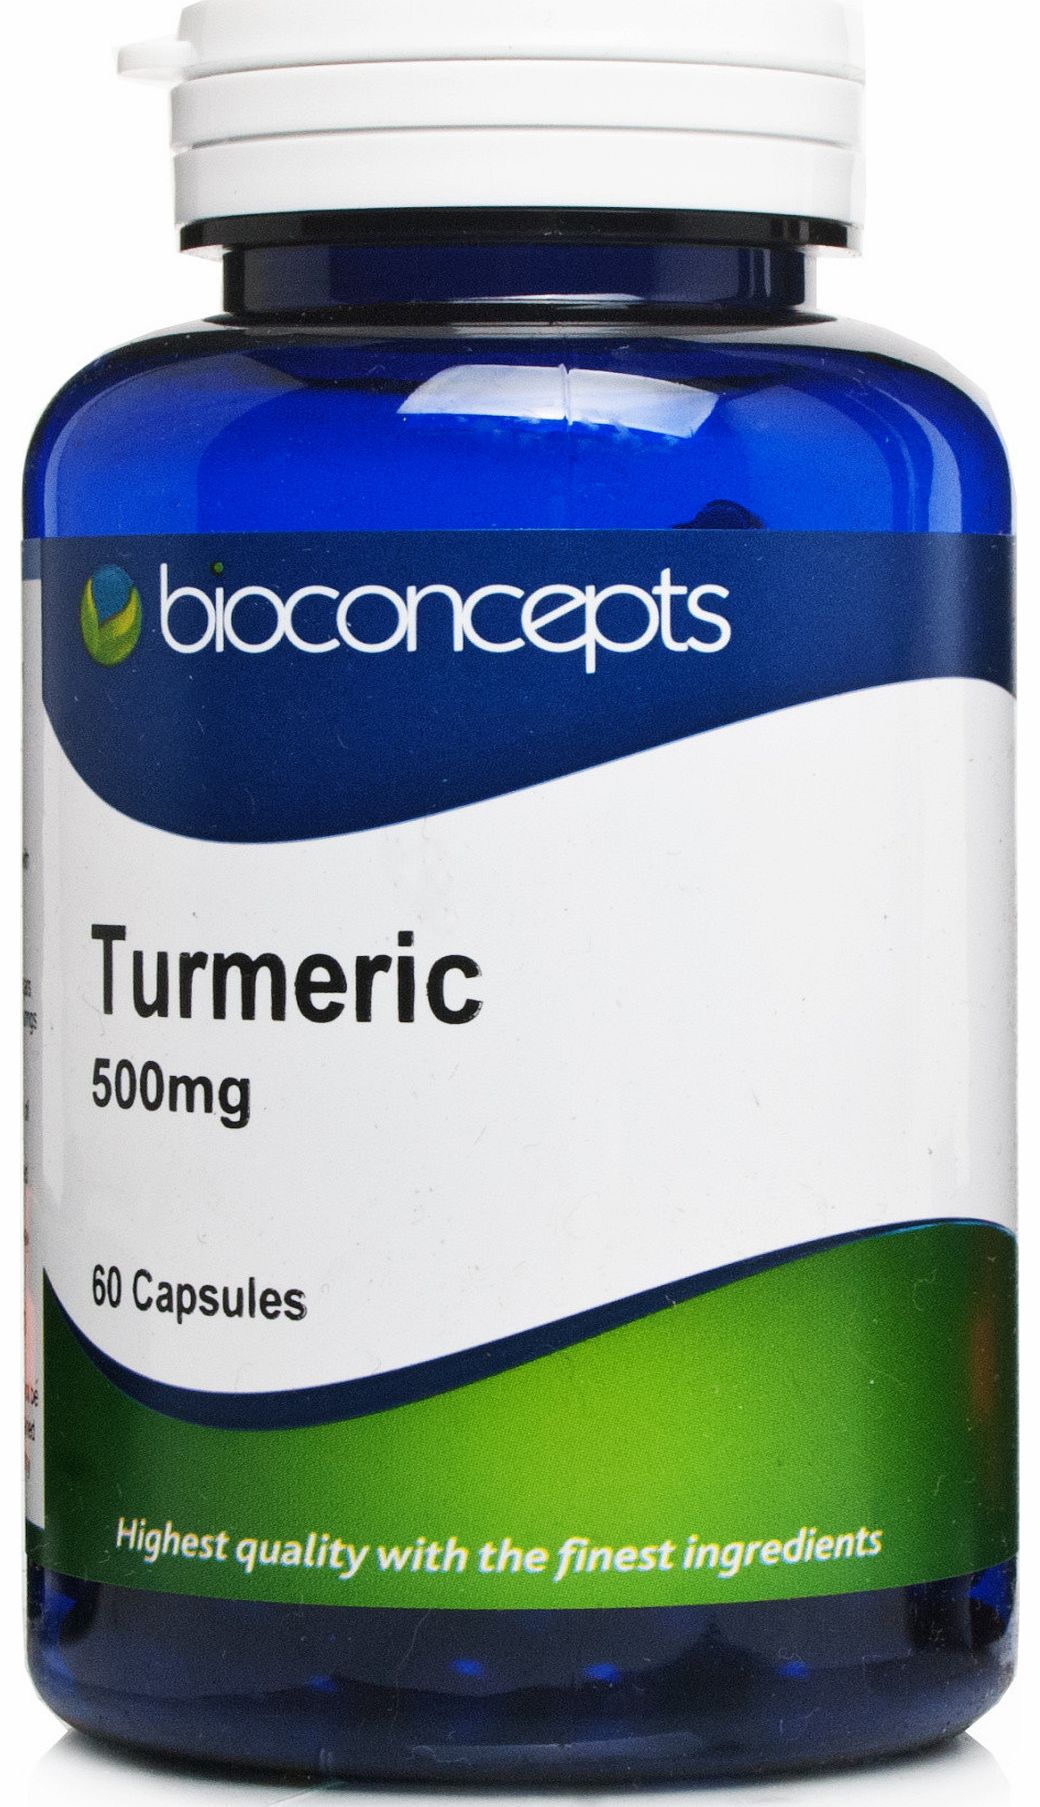 Bioconcepts Turmeric 500mg